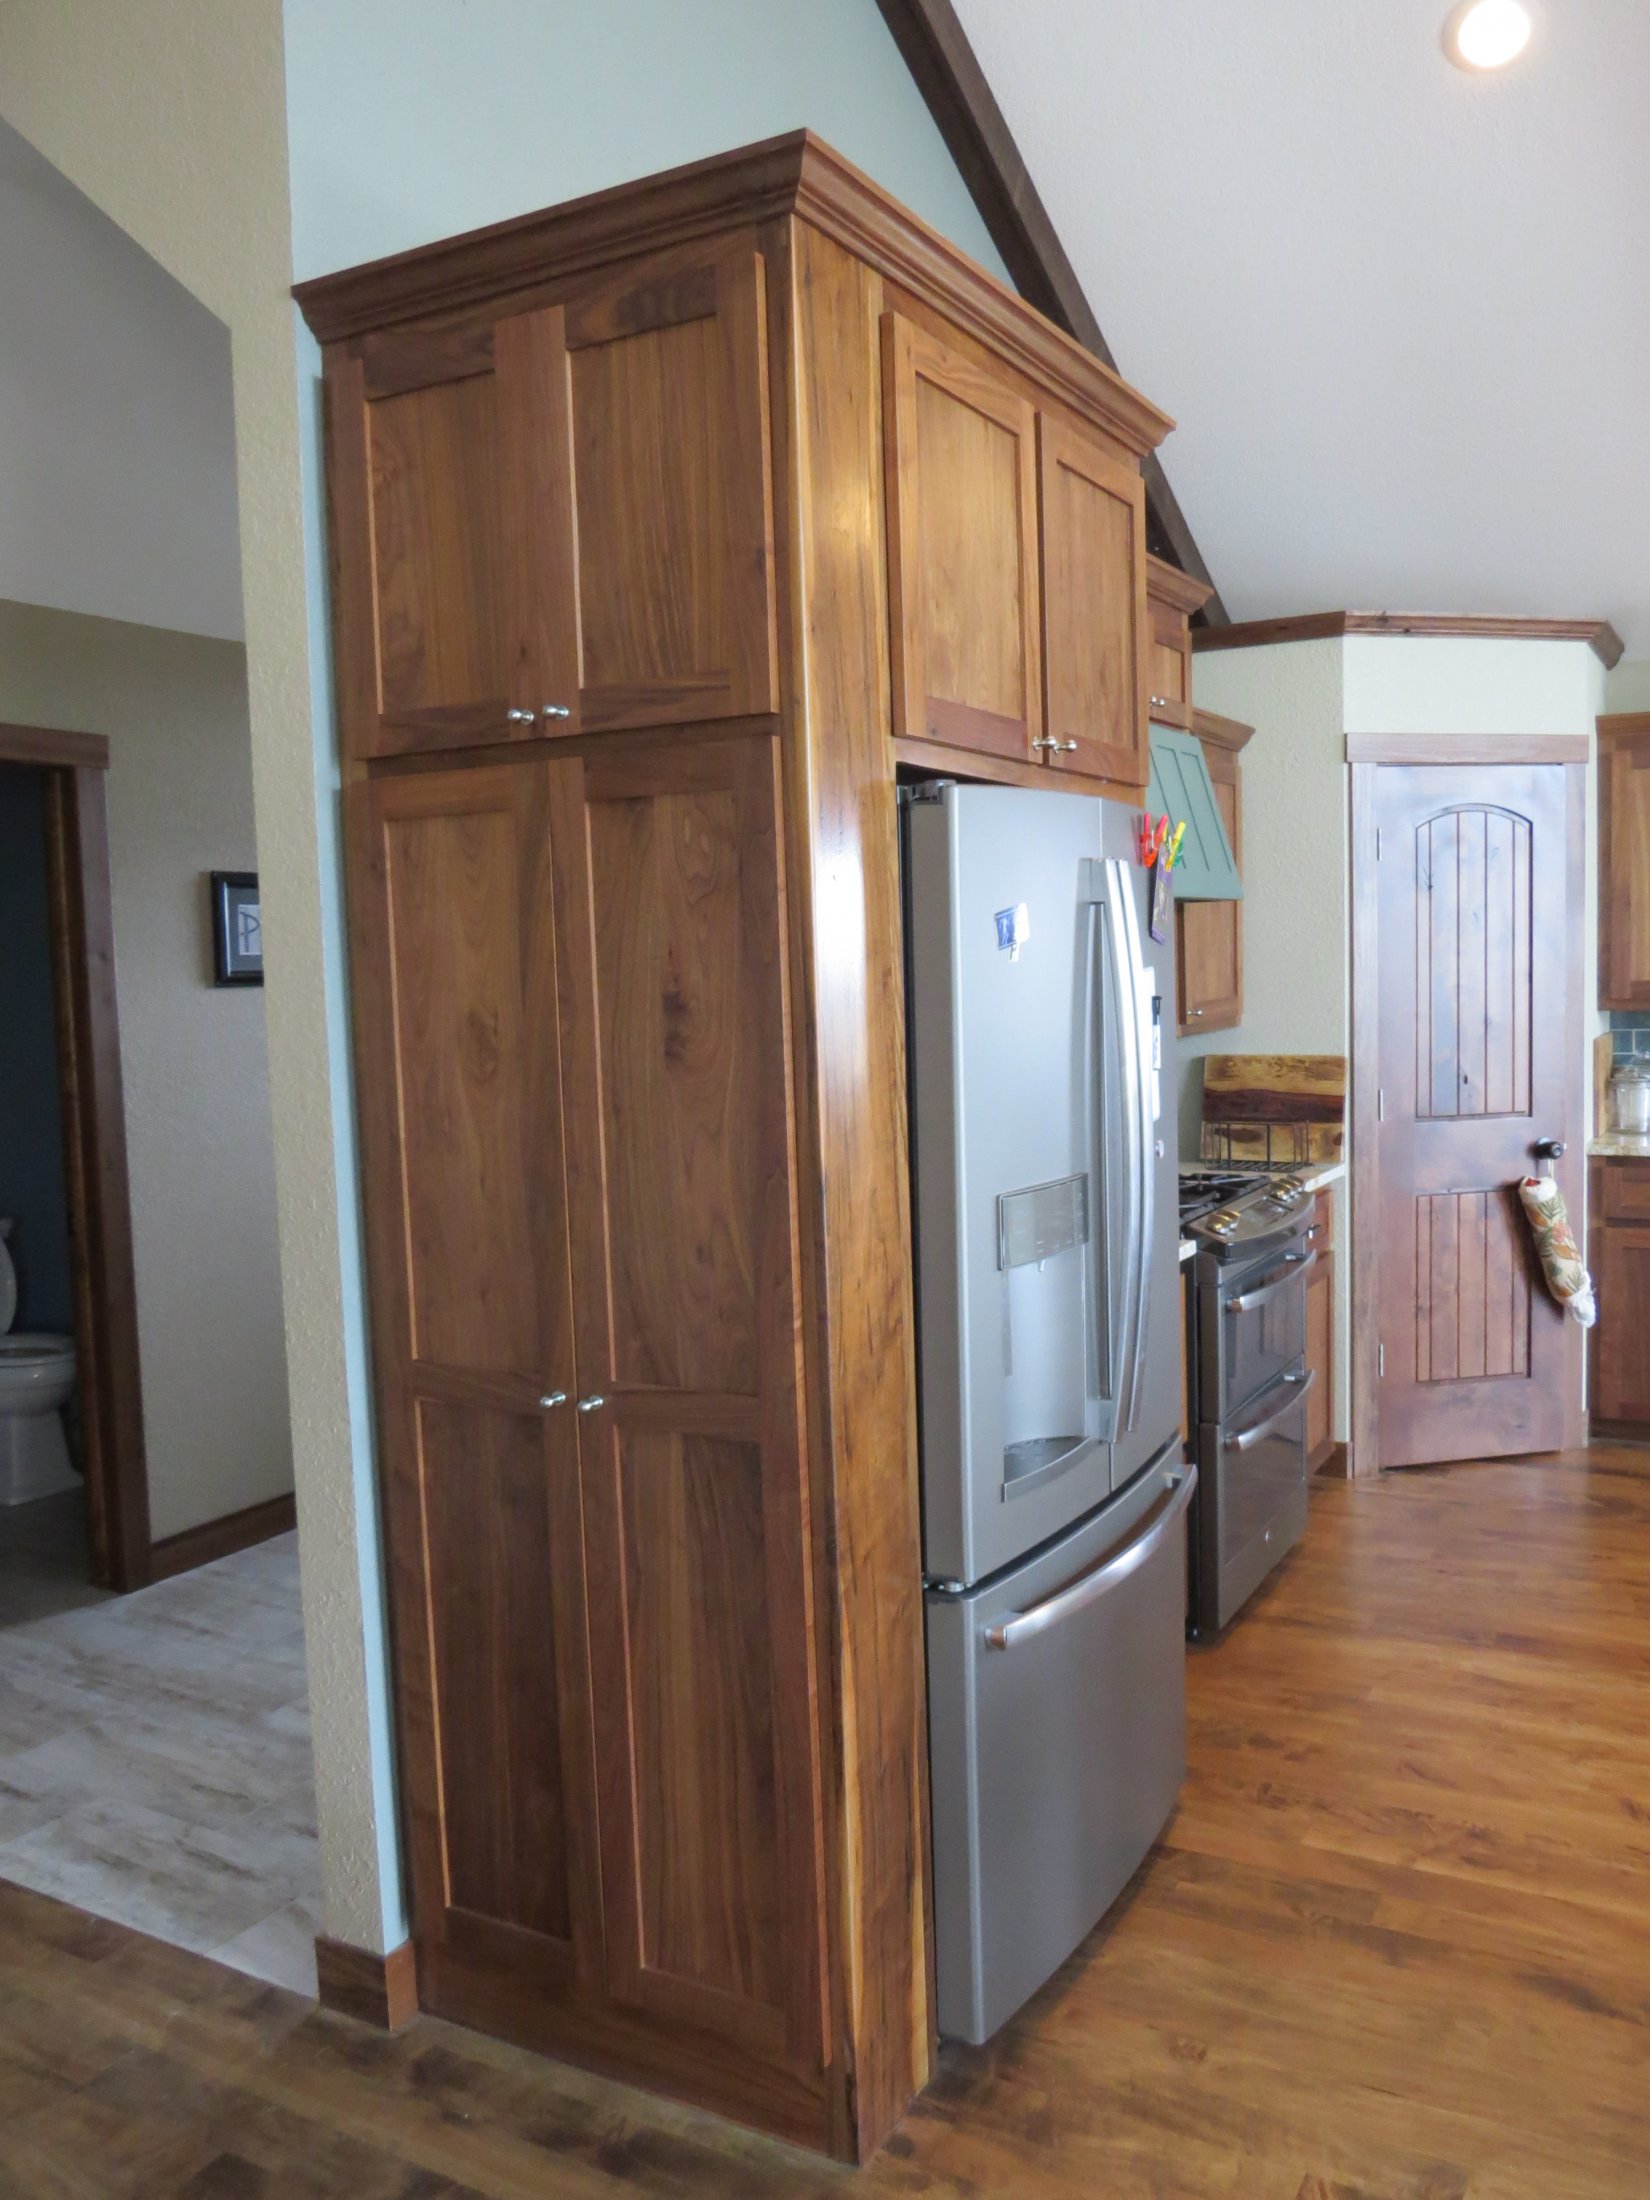 Stained Walnut Broom/Storage/Refrigerator Cabinet